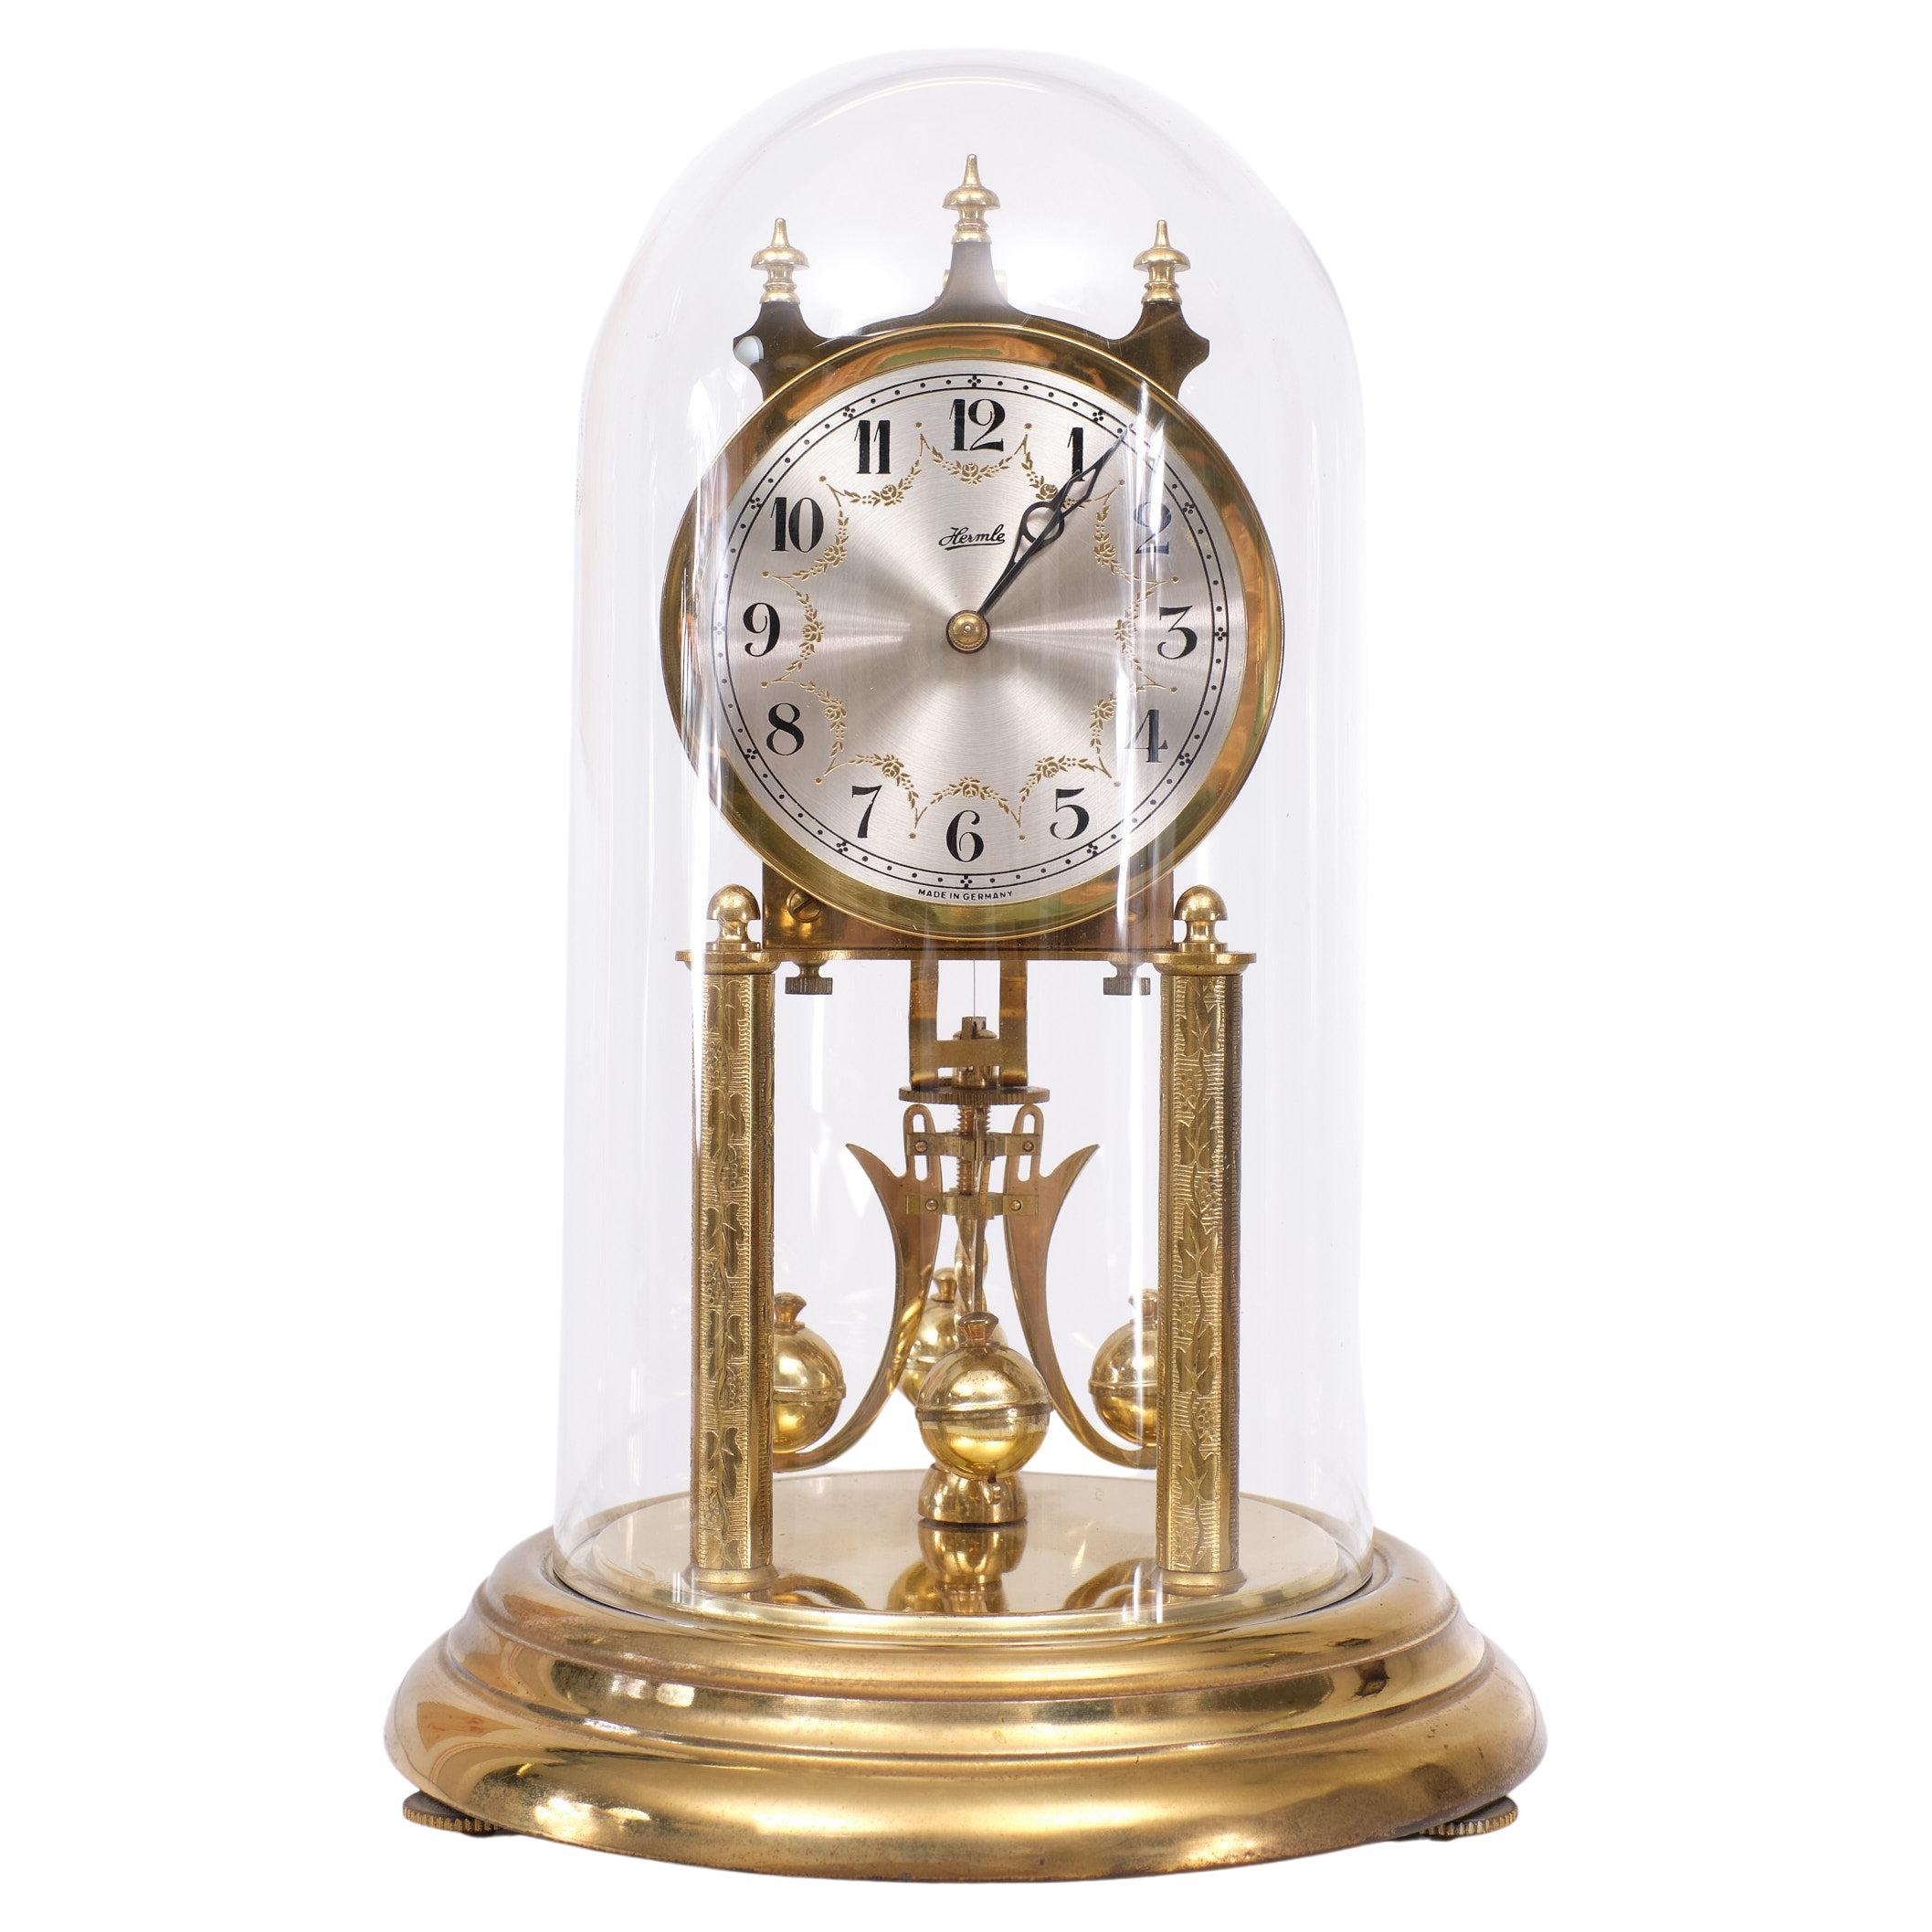 Anniversary Dome clock - Franz Hermle - Brass, Glass - 1950s 